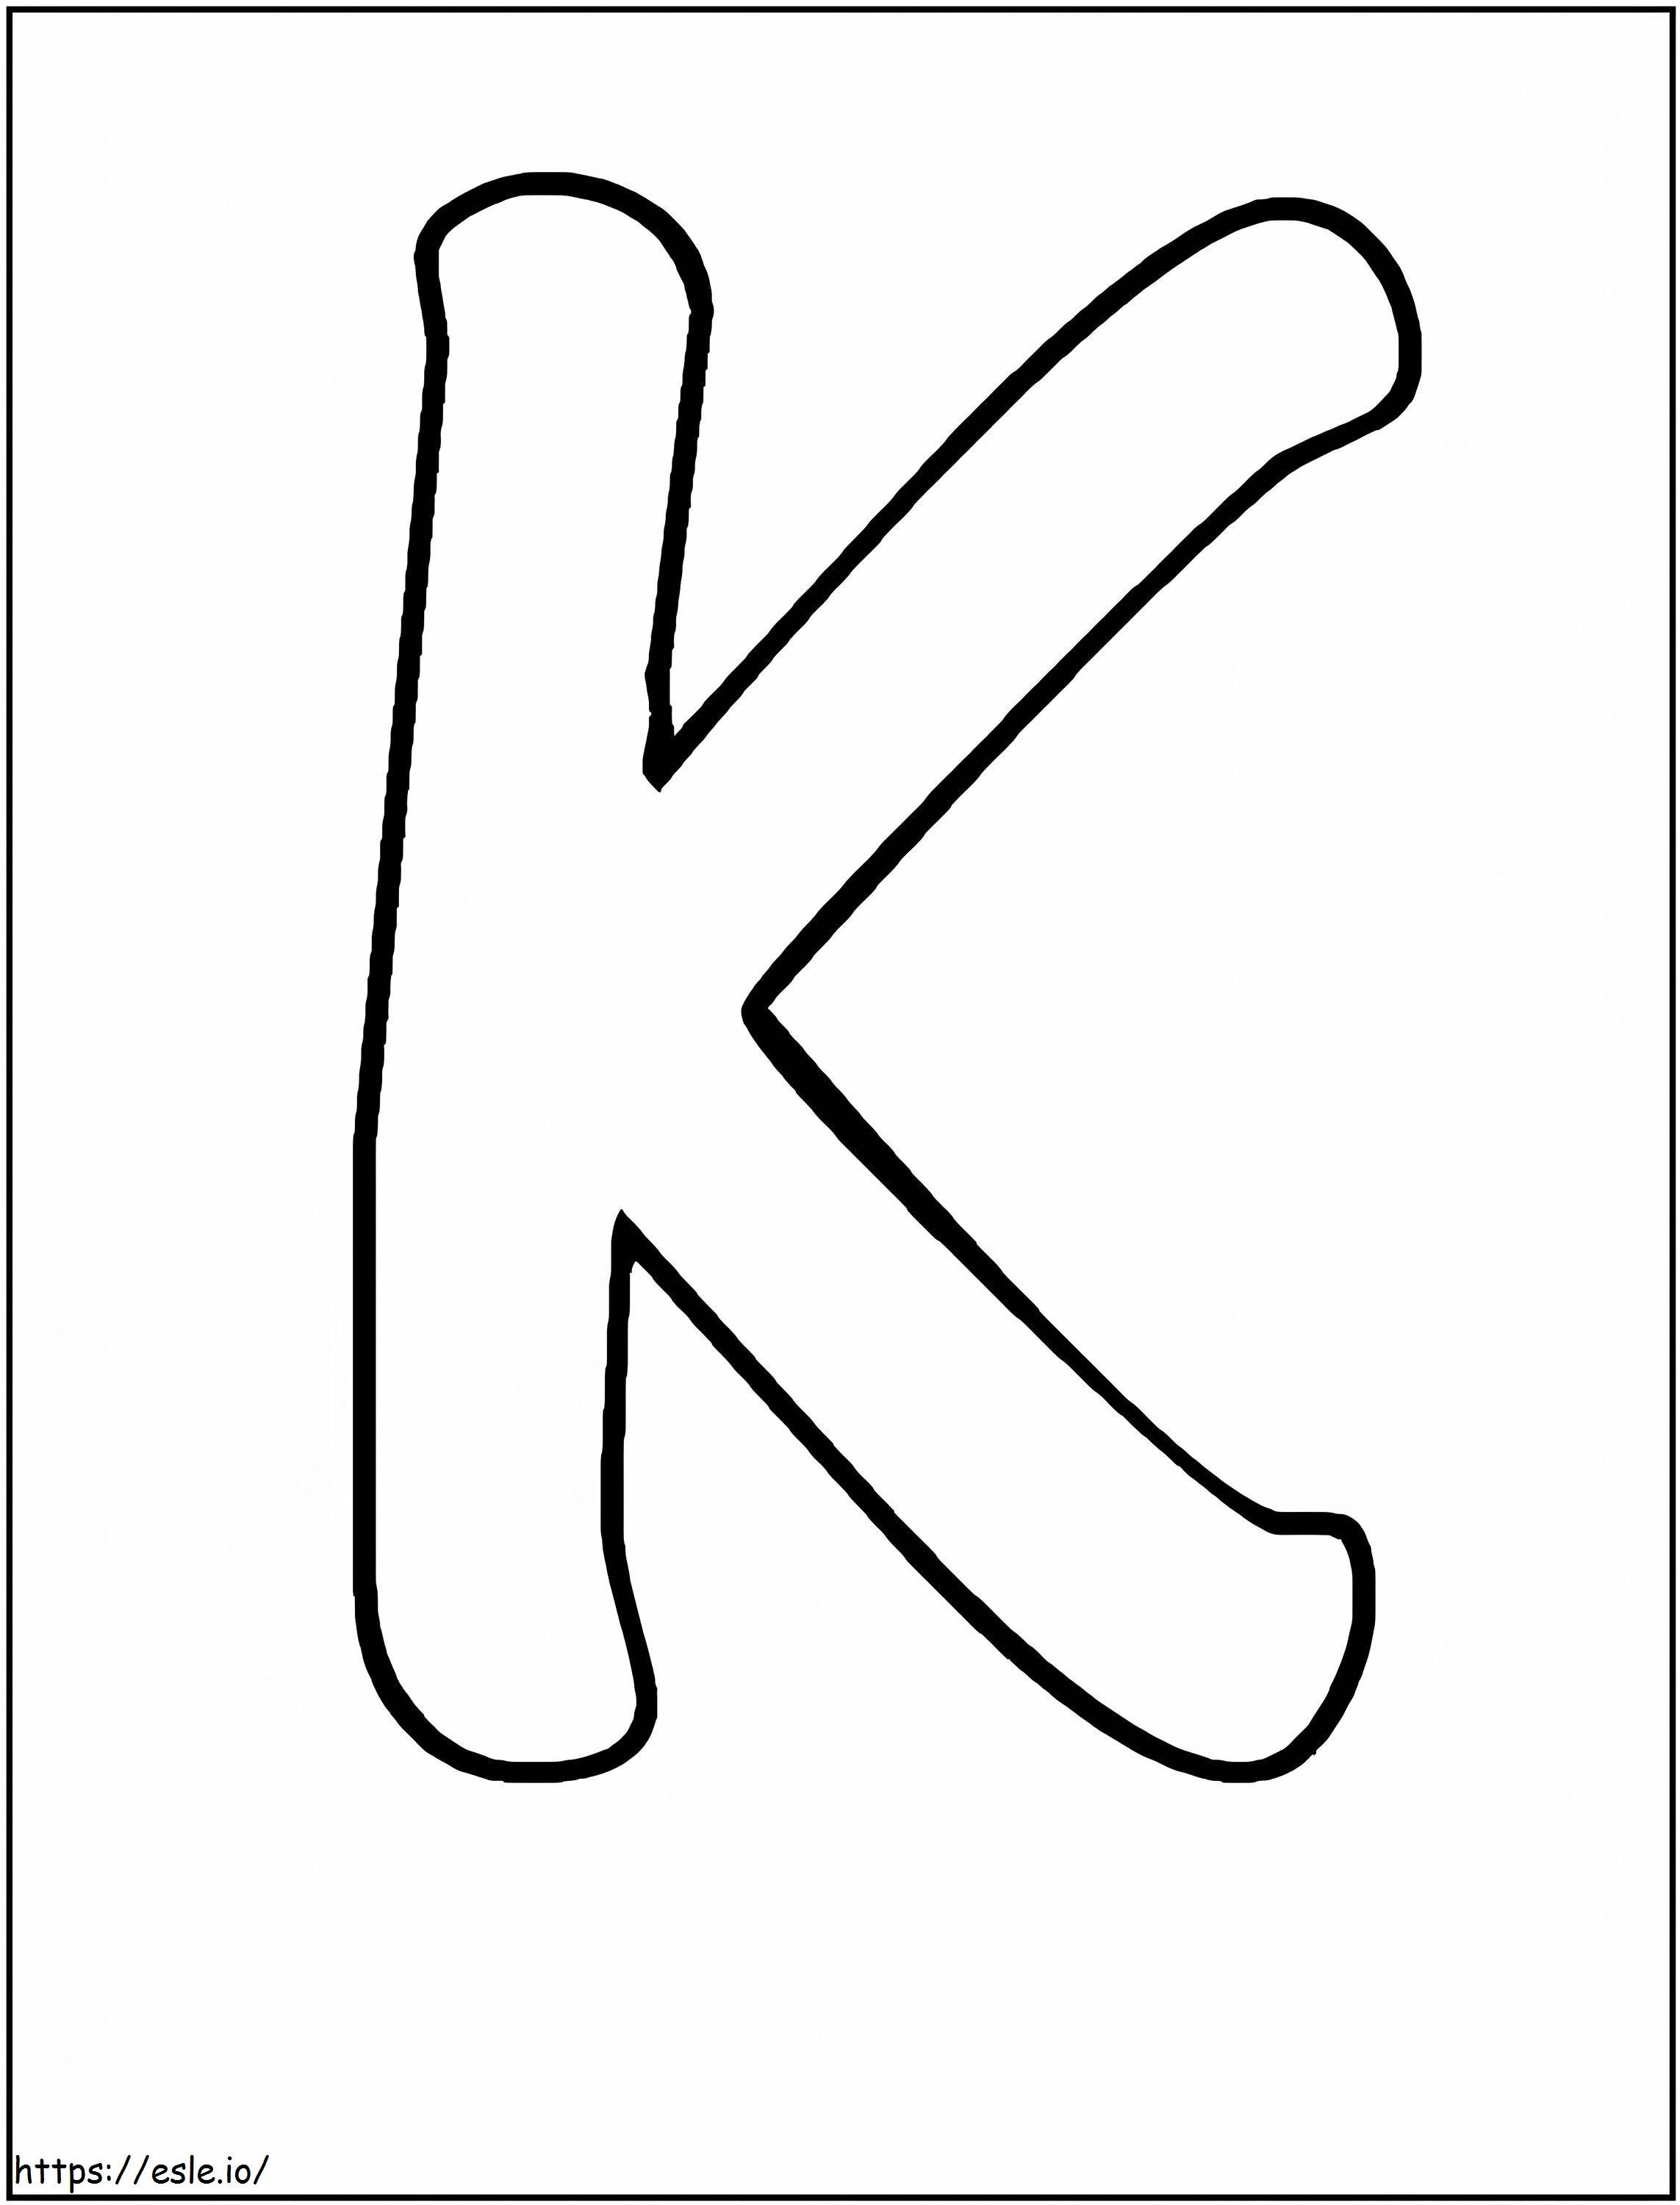 Alphabet Letter K coloring page